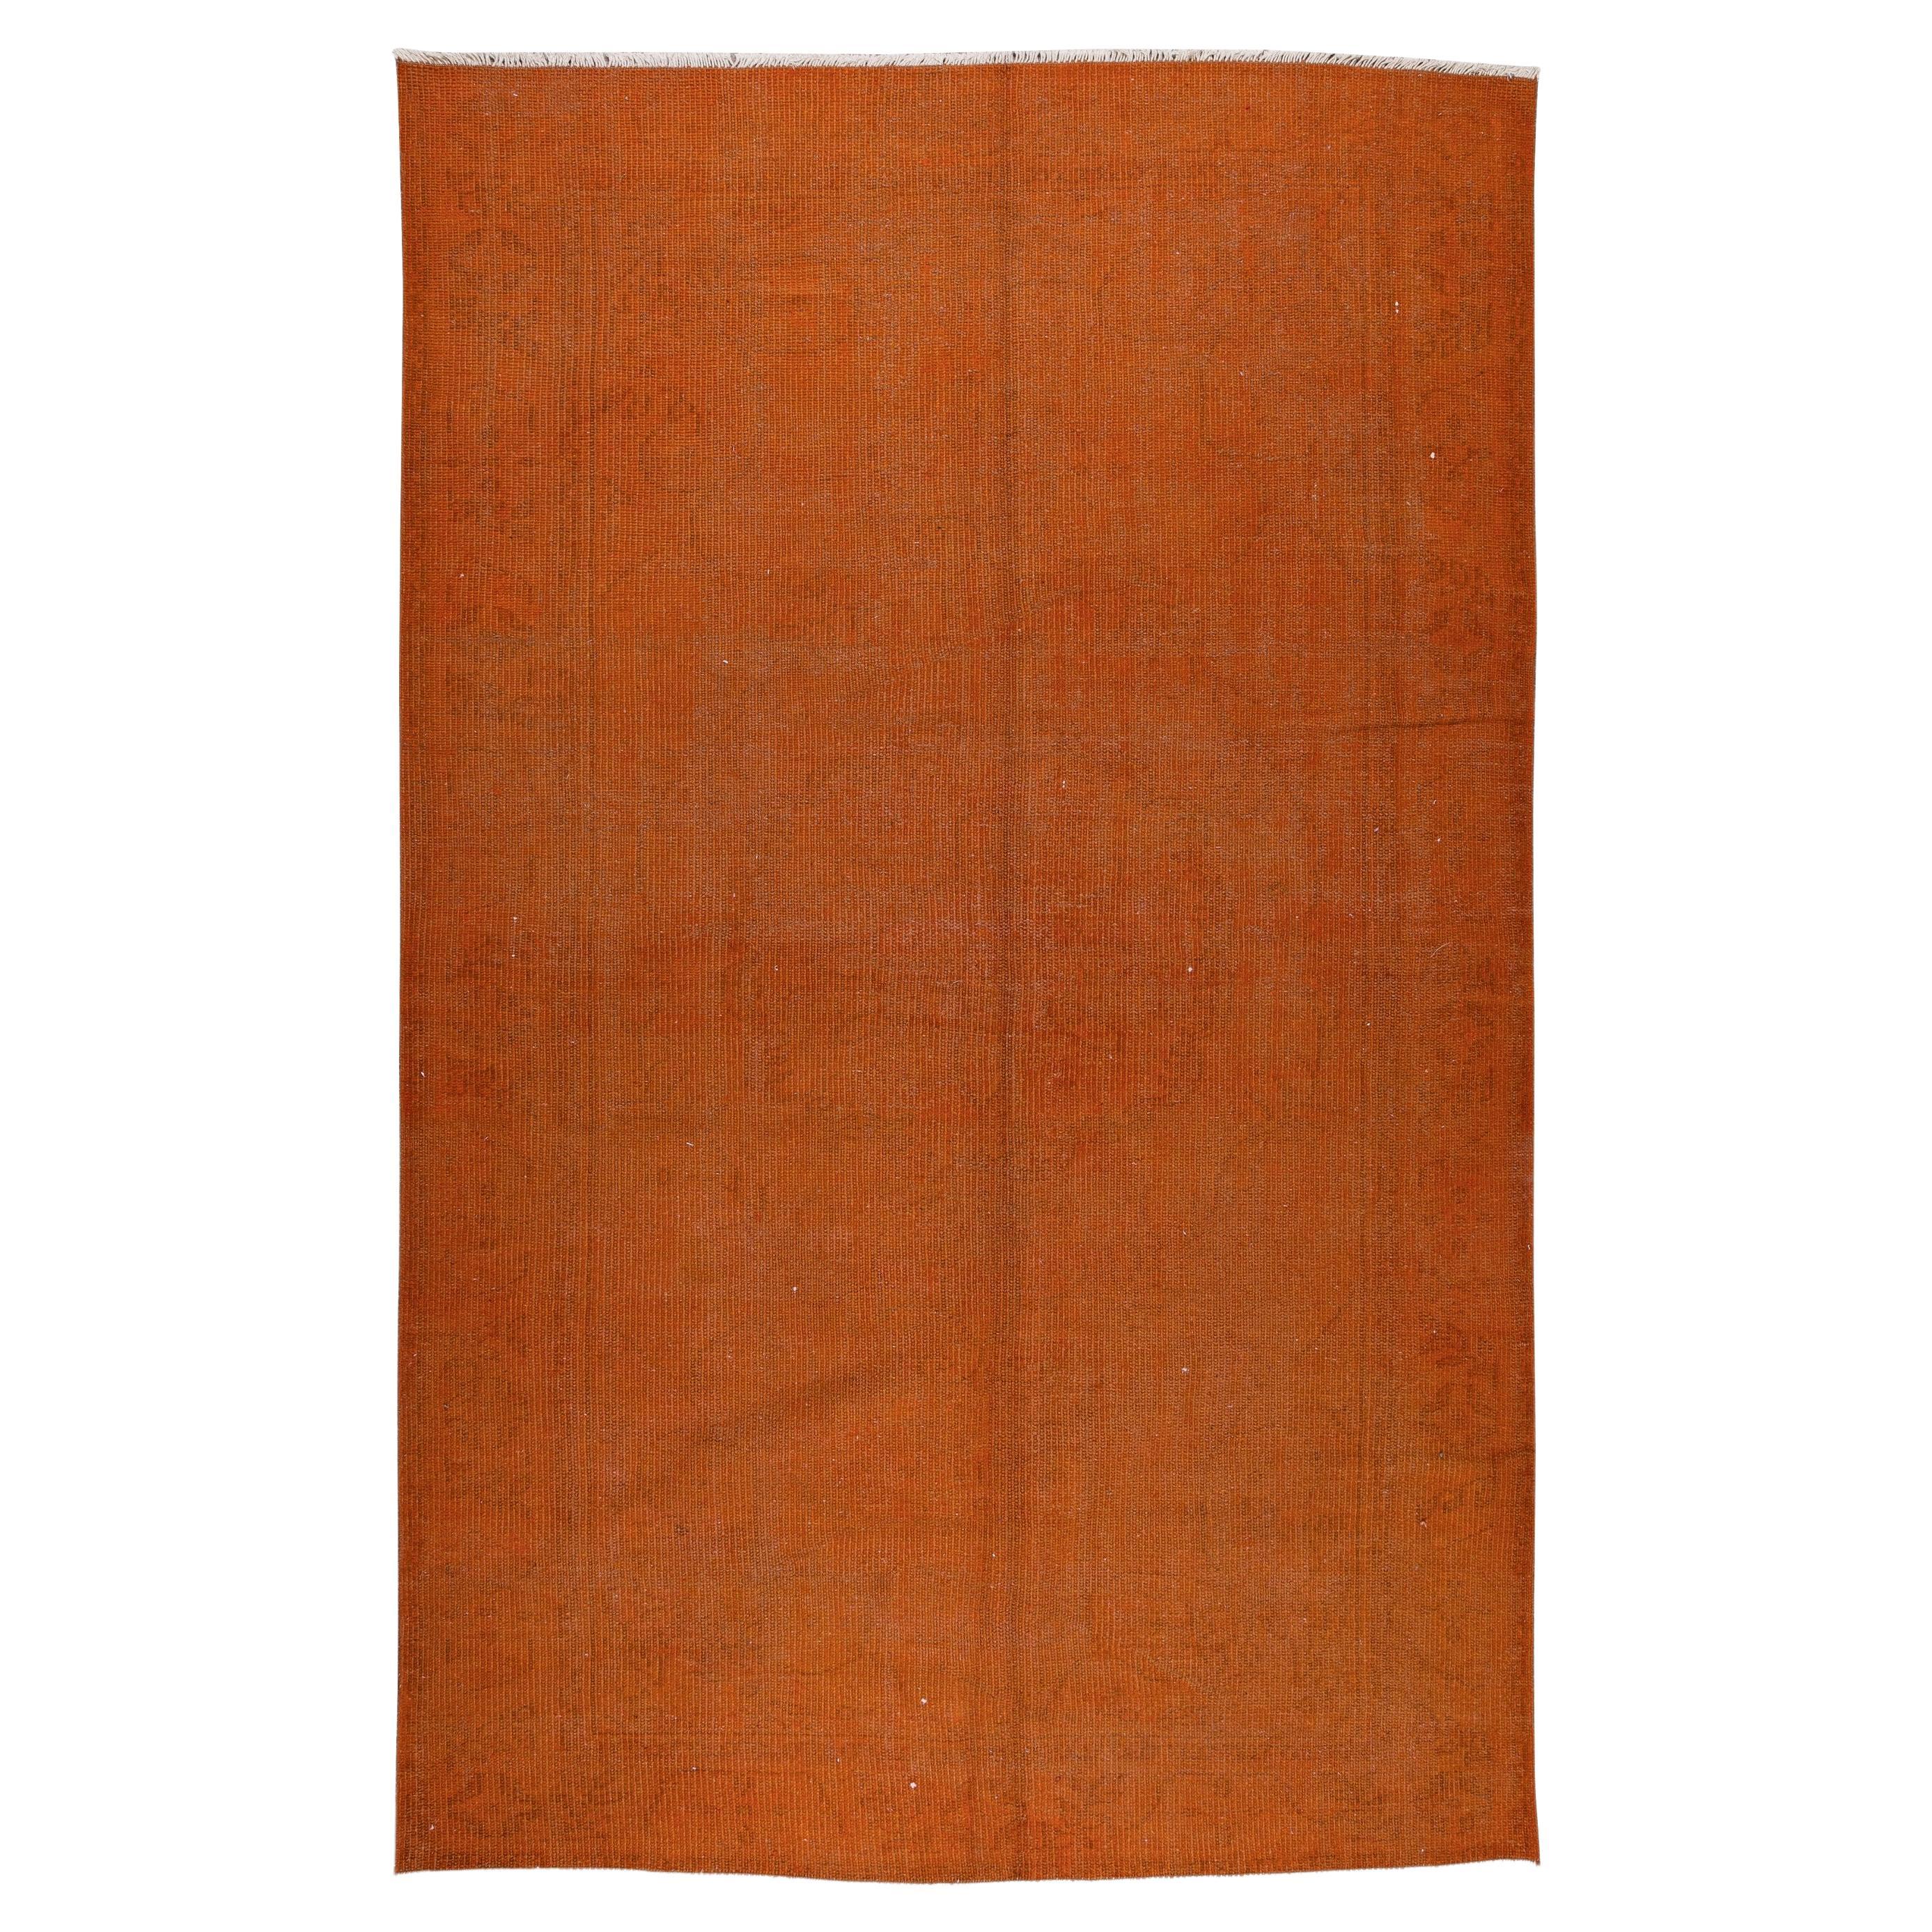 5.5x8.7 Ft Orange Area Rug, 1960s Turkish Handmade Carpet for Modern Interior